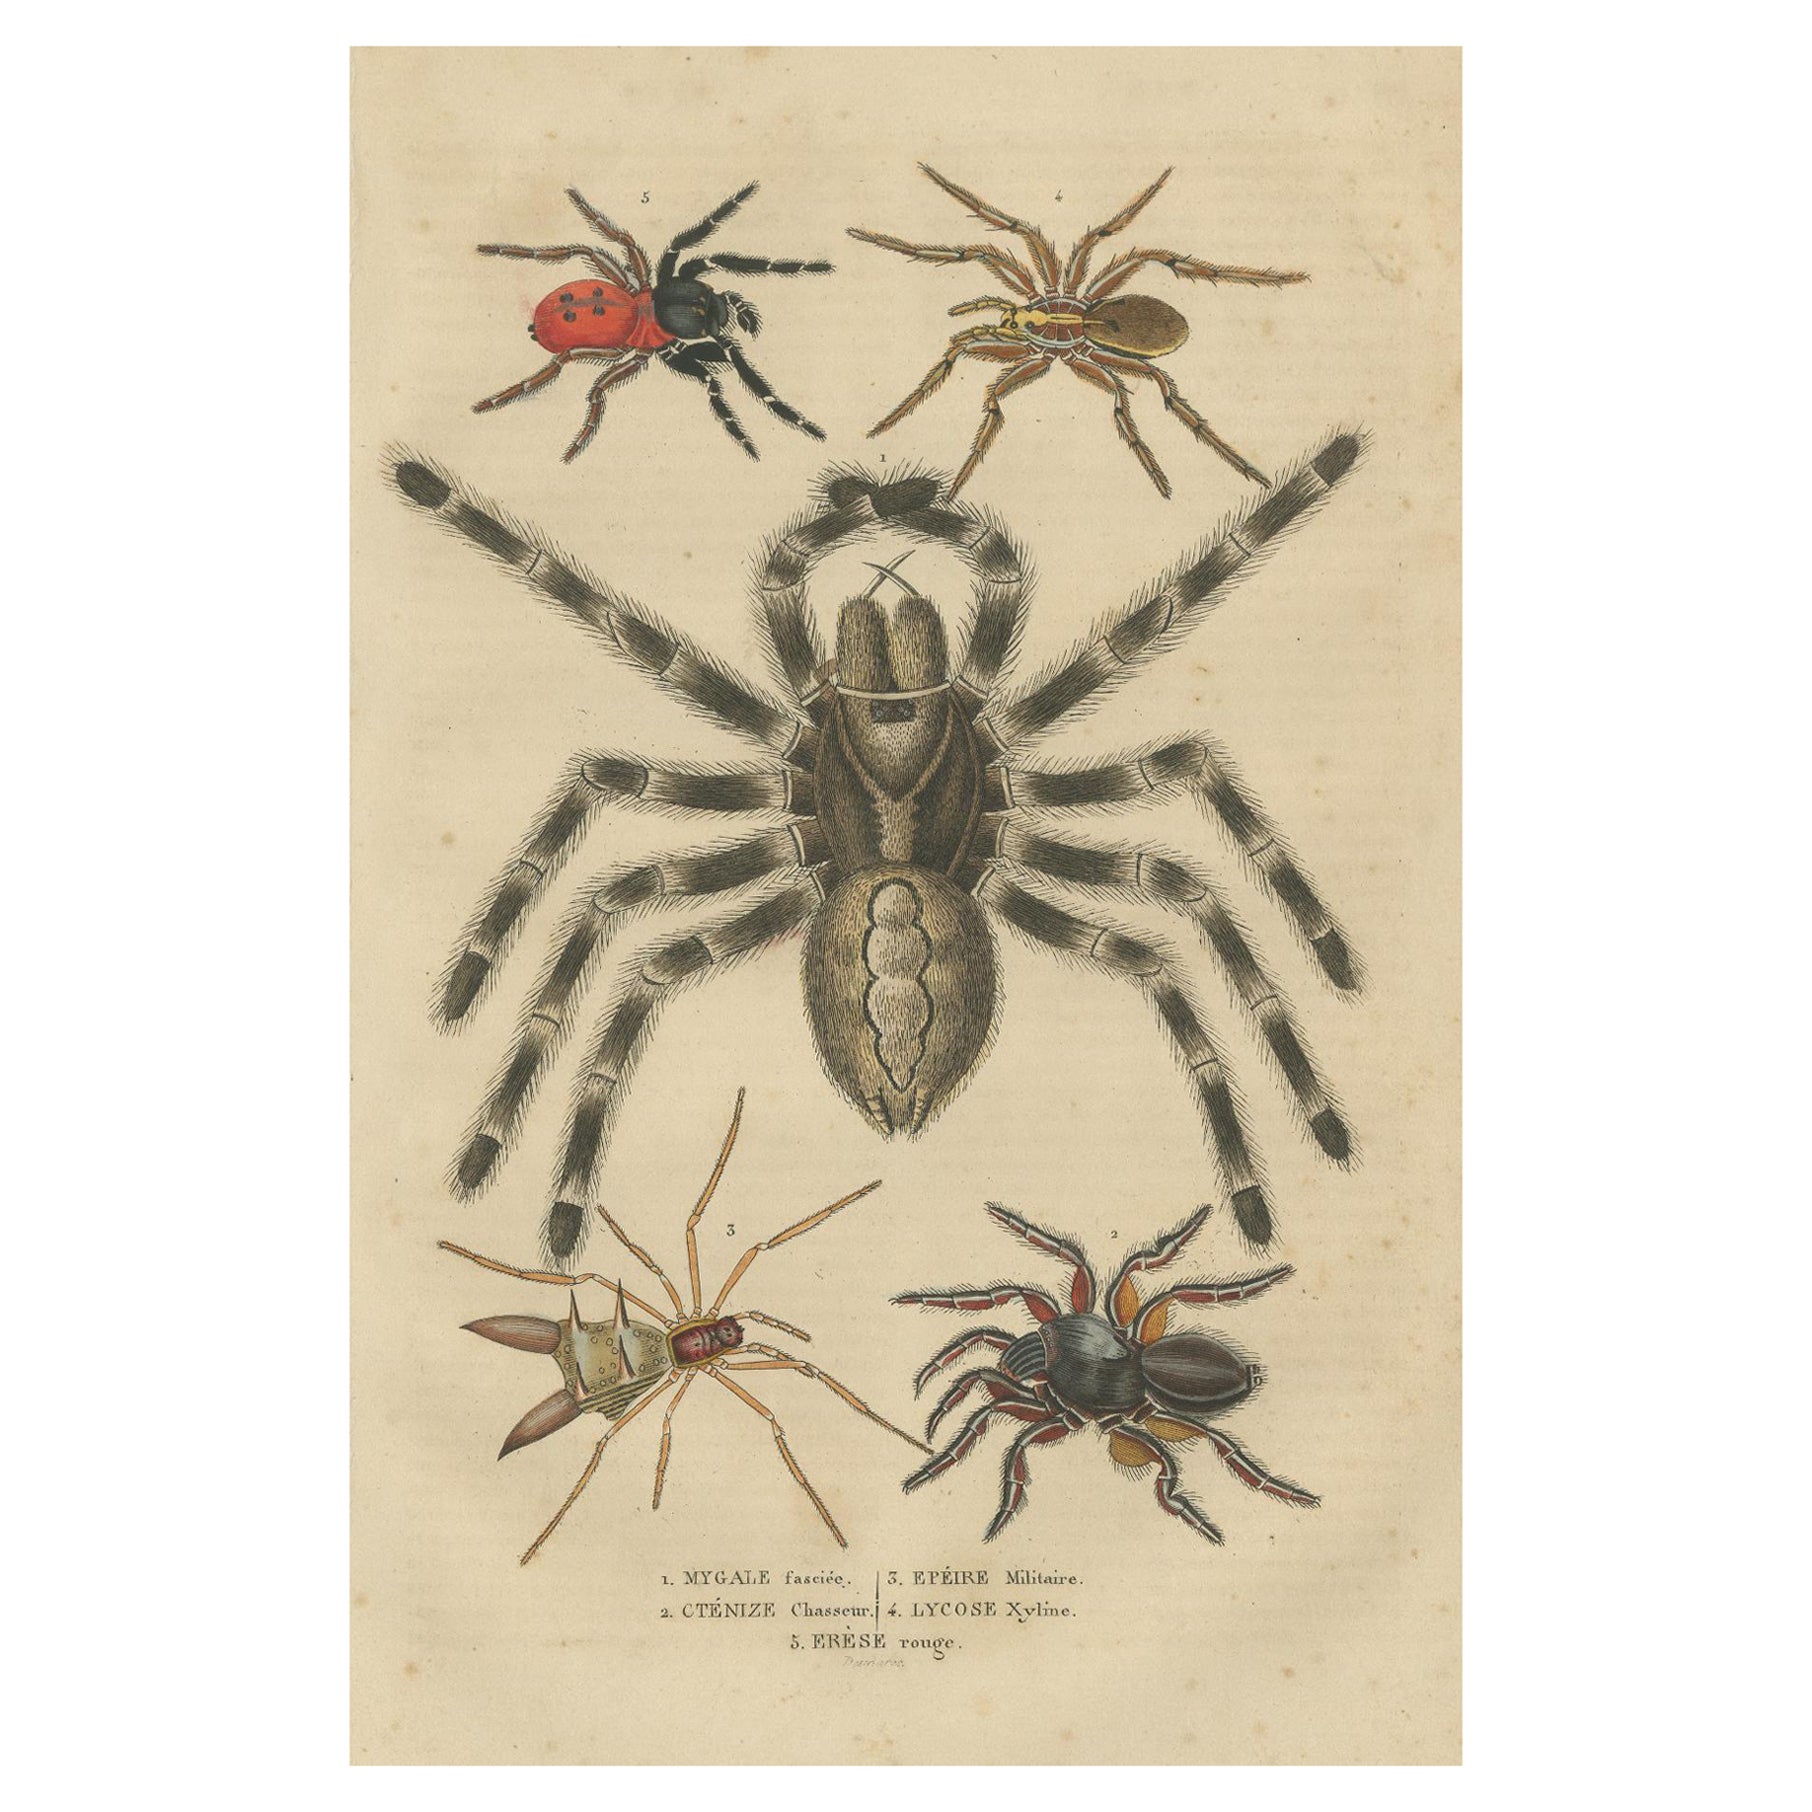 Antique 1845 Arachnid Study: Handcolored Engraving of Varied Spider Species